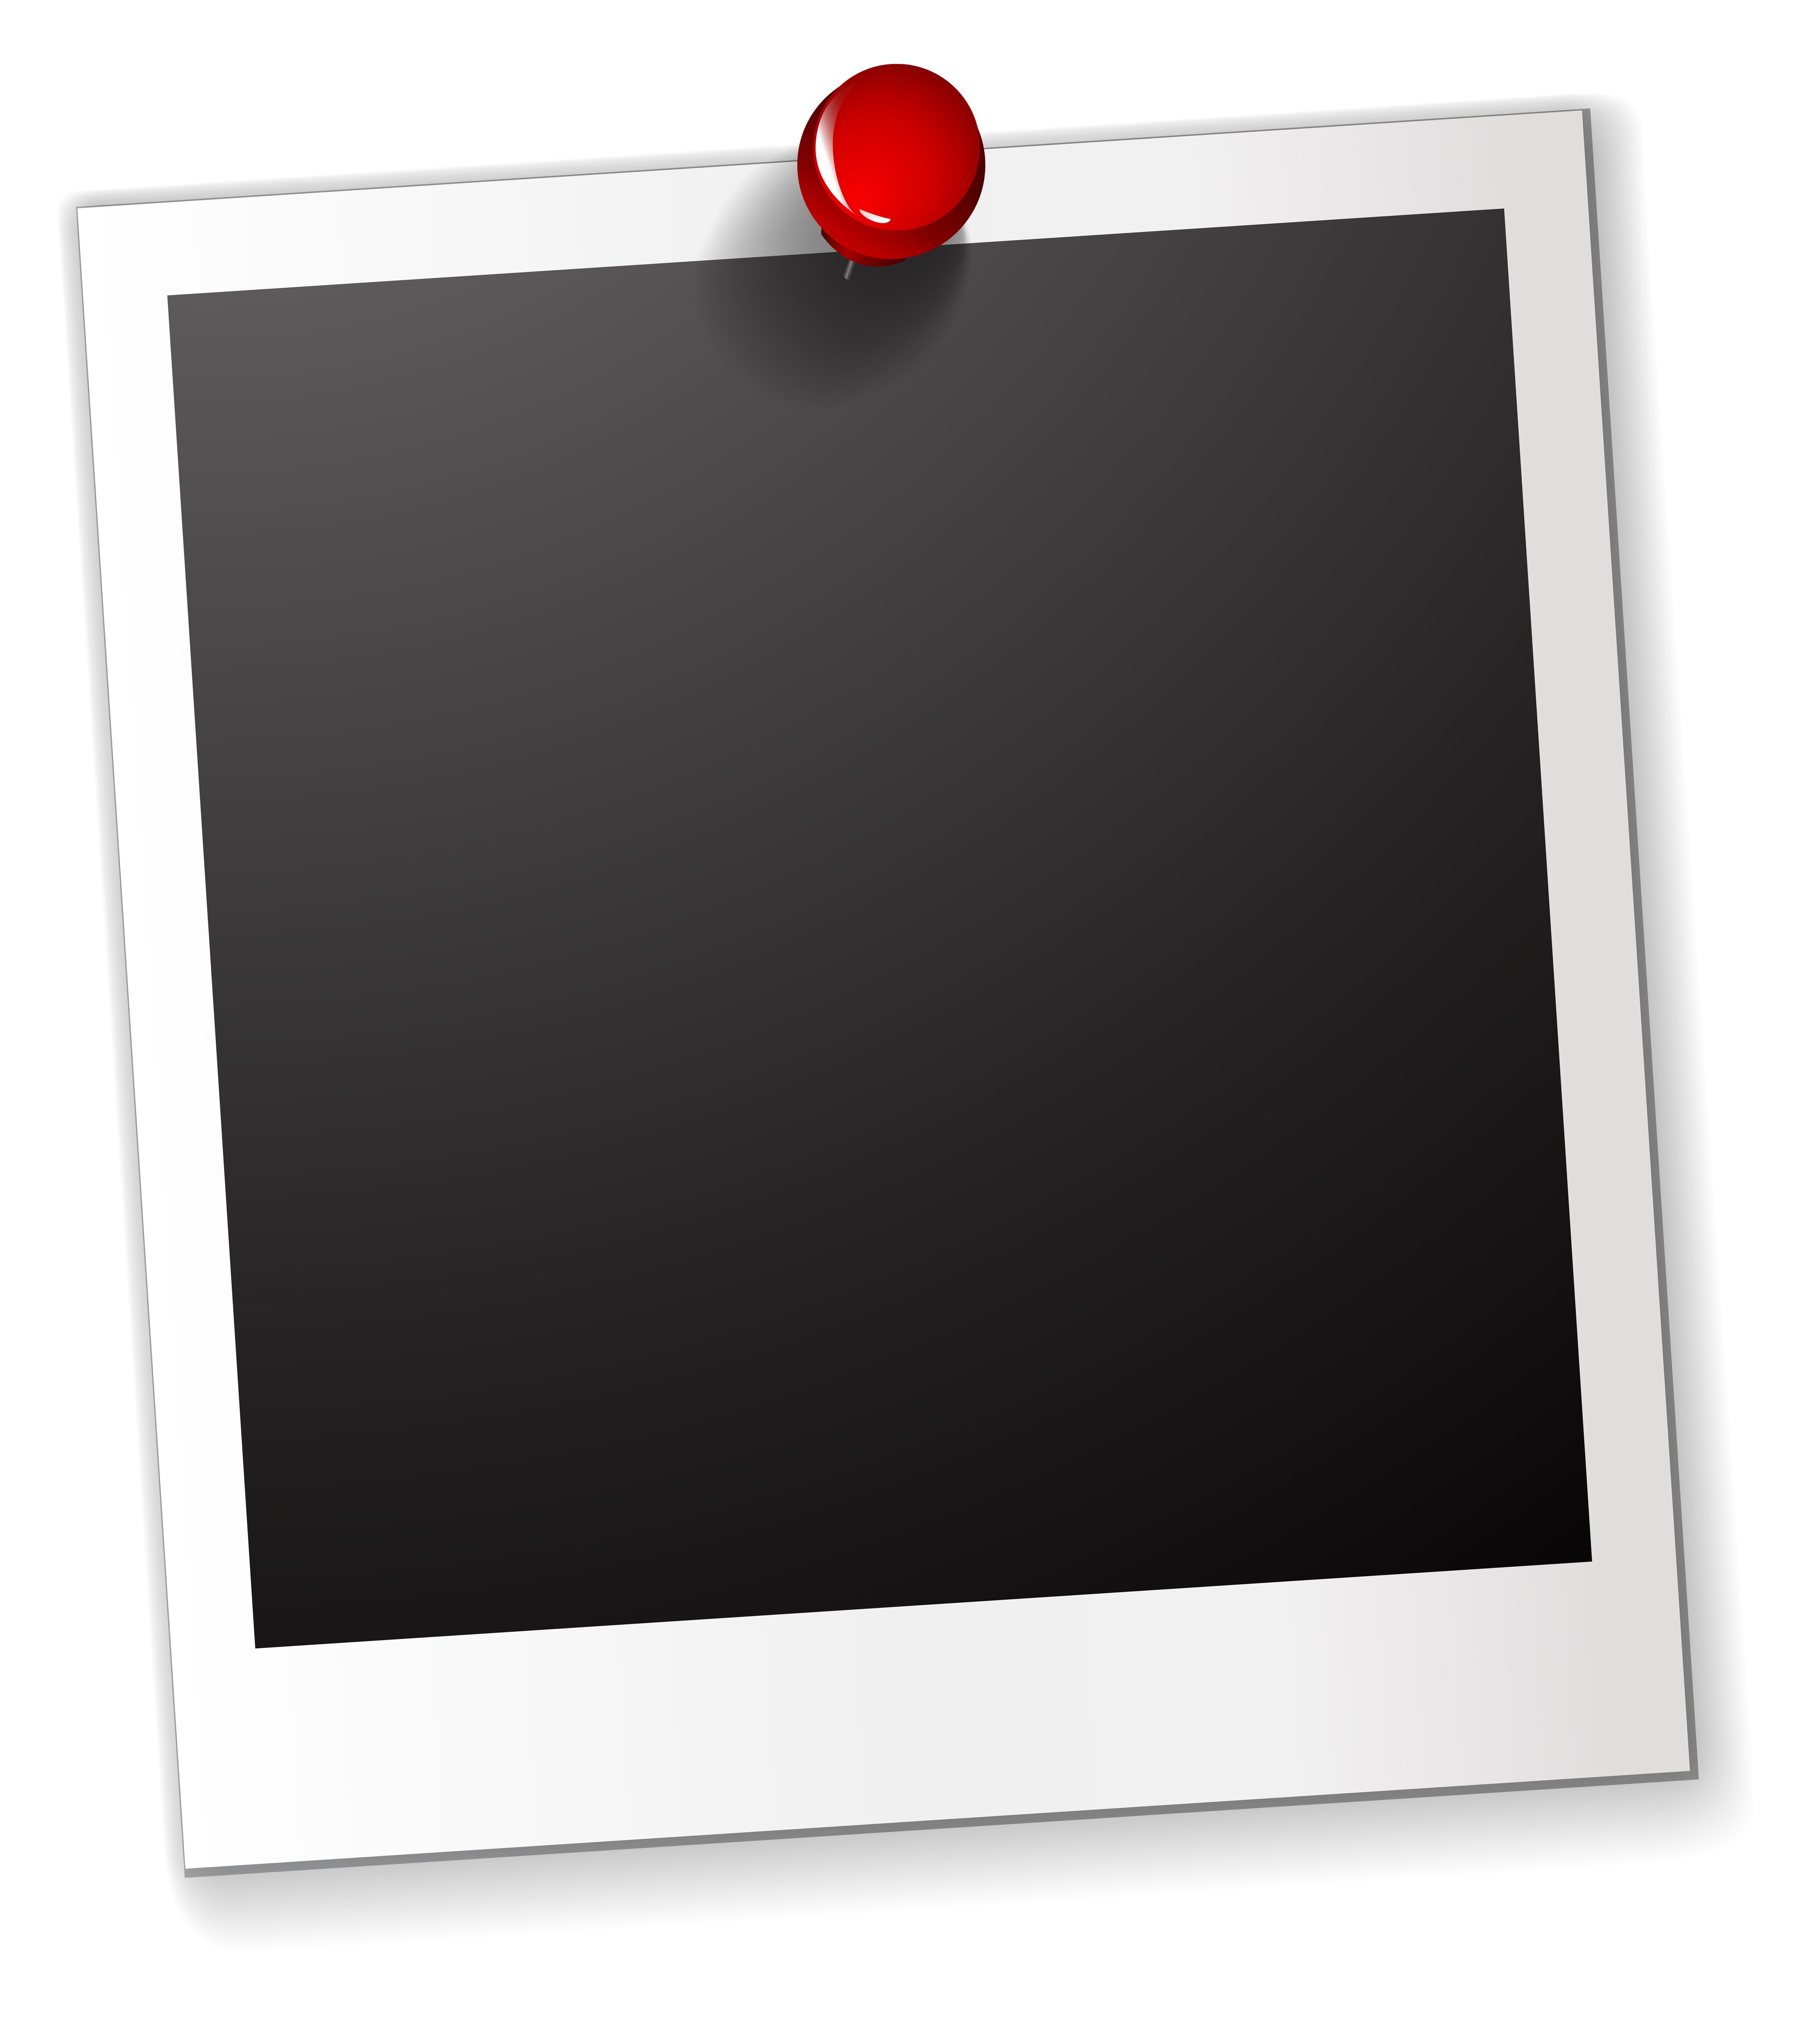 An empty frame - Download Free Vectors, Clipart Graphics & Vector Art